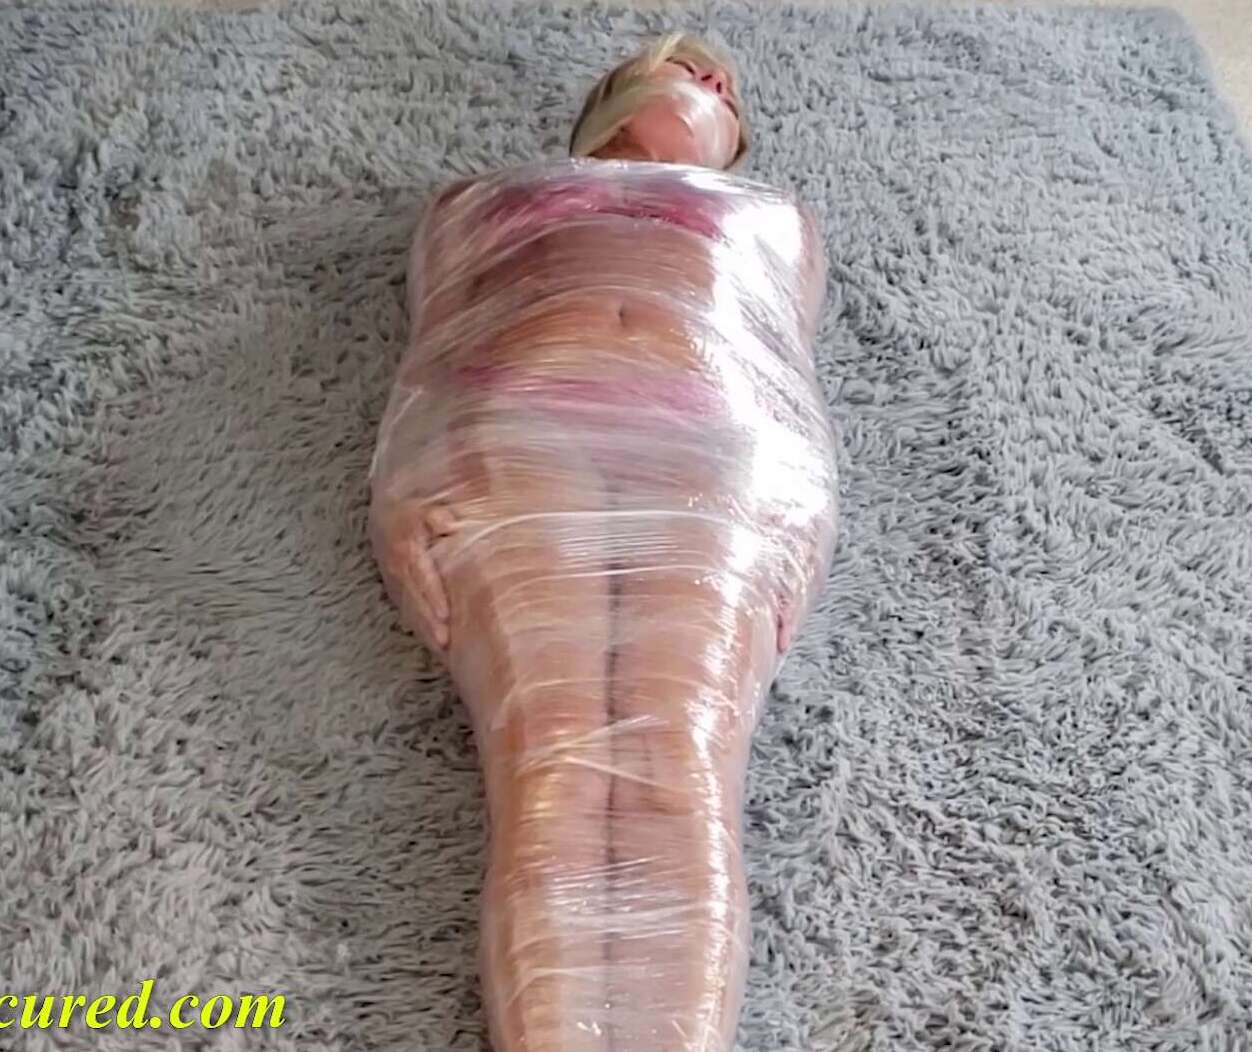 Tape Bondage - Dakkota is Wrapped and Zipped in tight plastic - Mummification Bondage